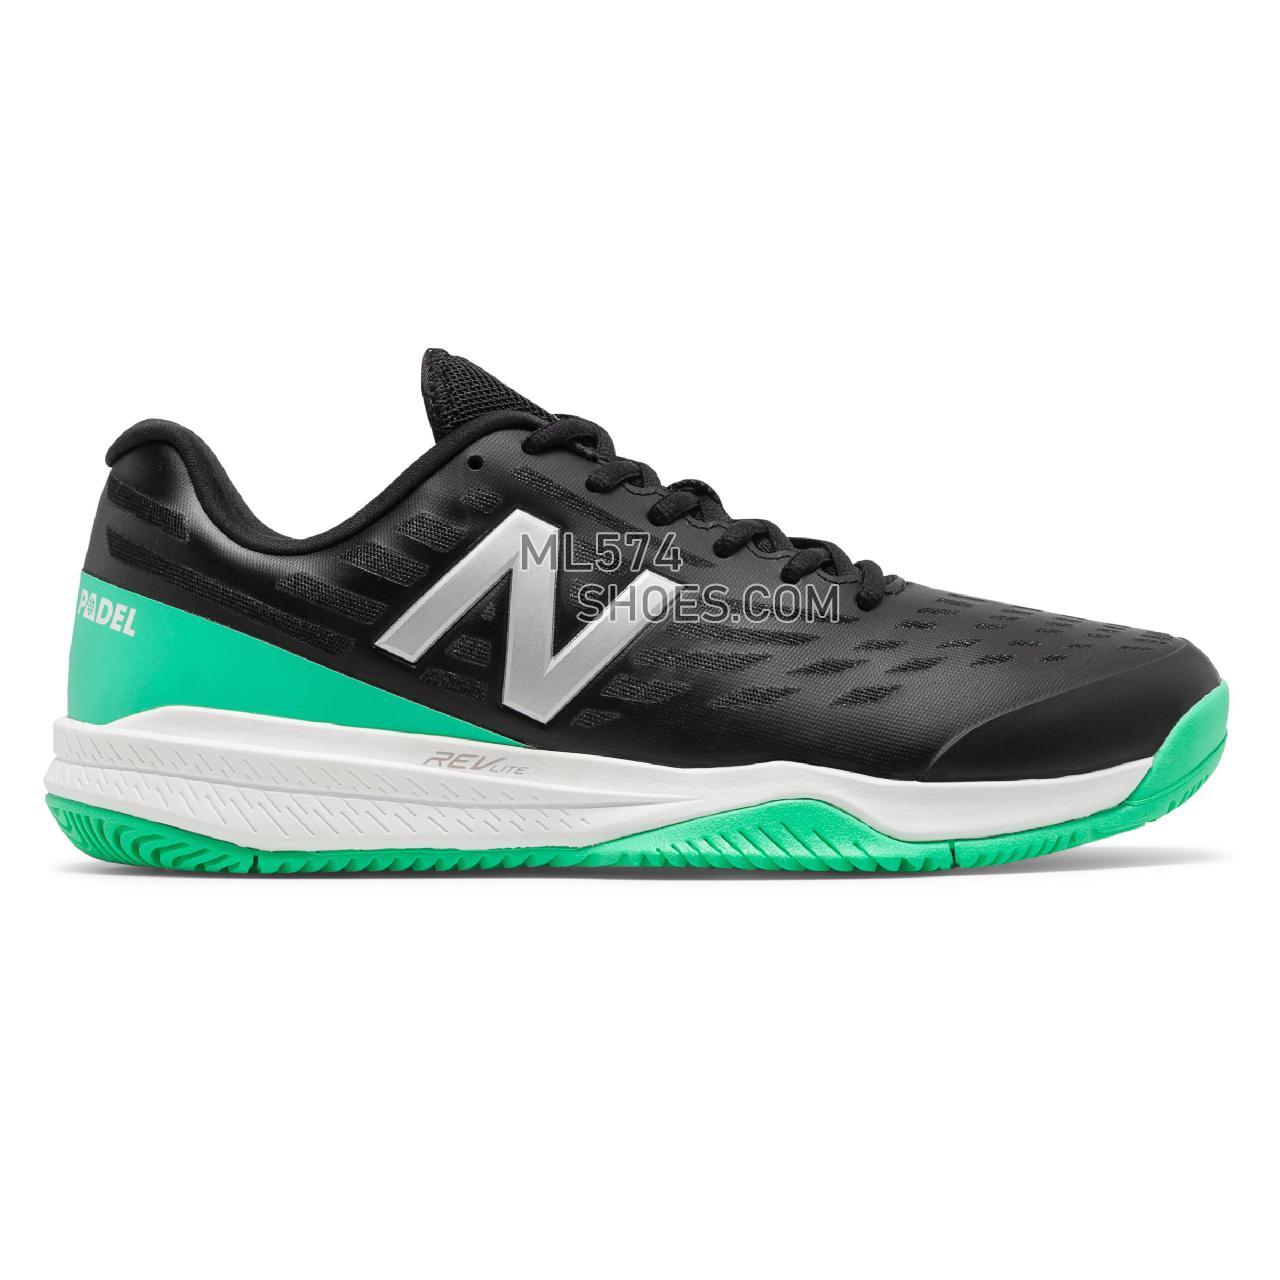 New Balance 796 - Men's Tennis - Black with Neon Emerald - MCH796PA